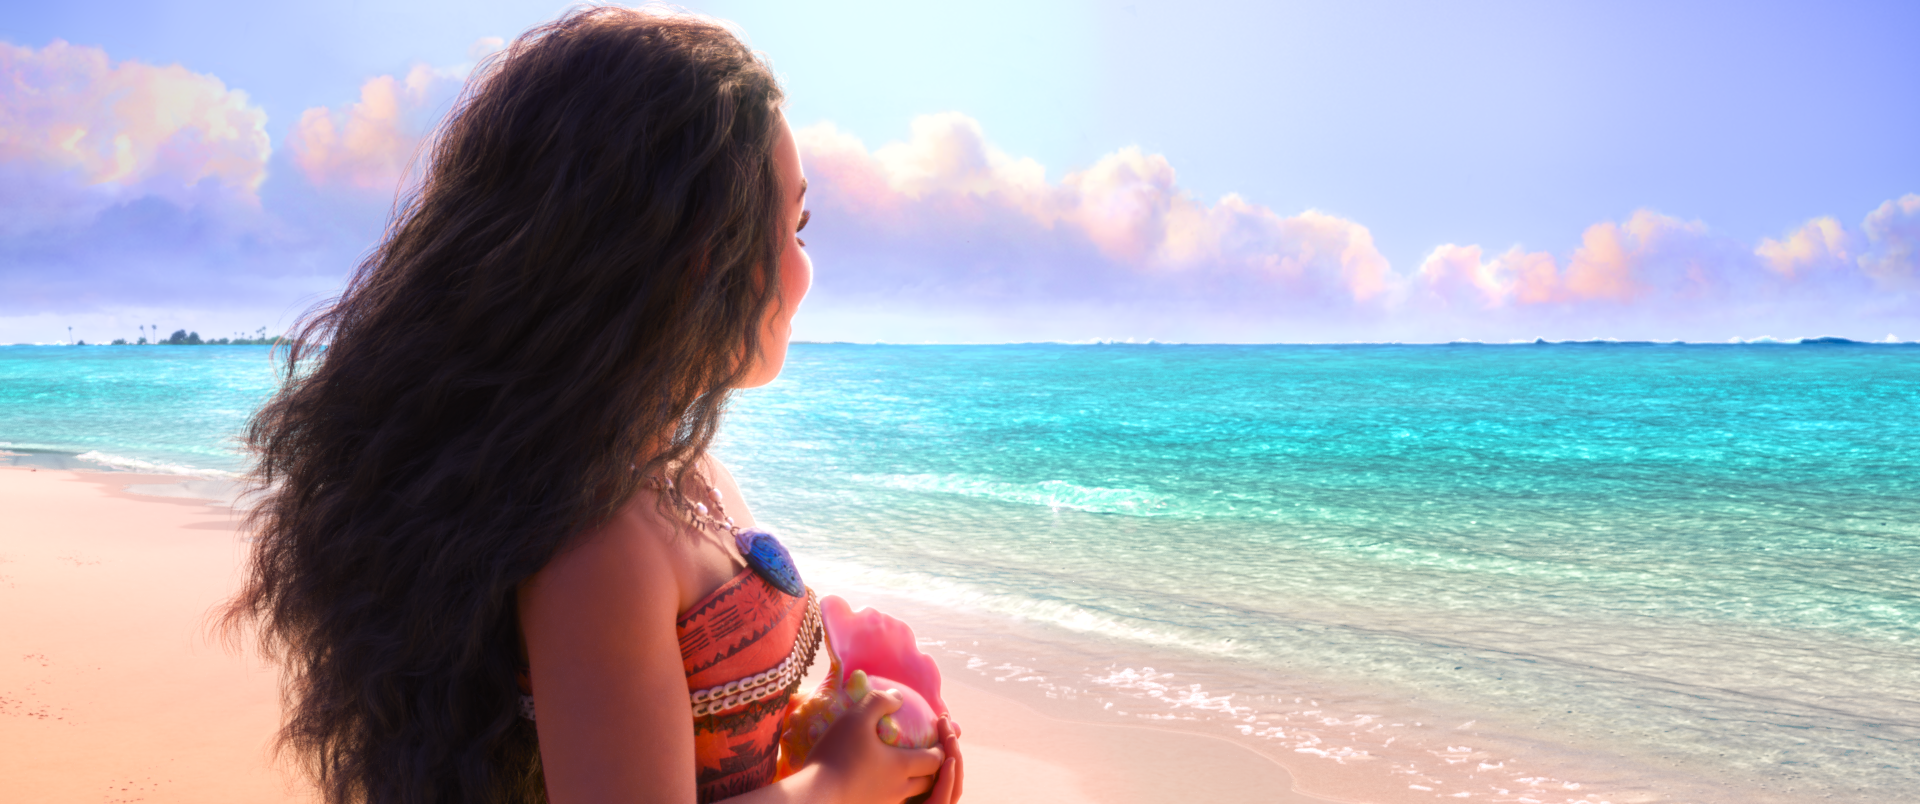 Cartoon girl looking out at ocean